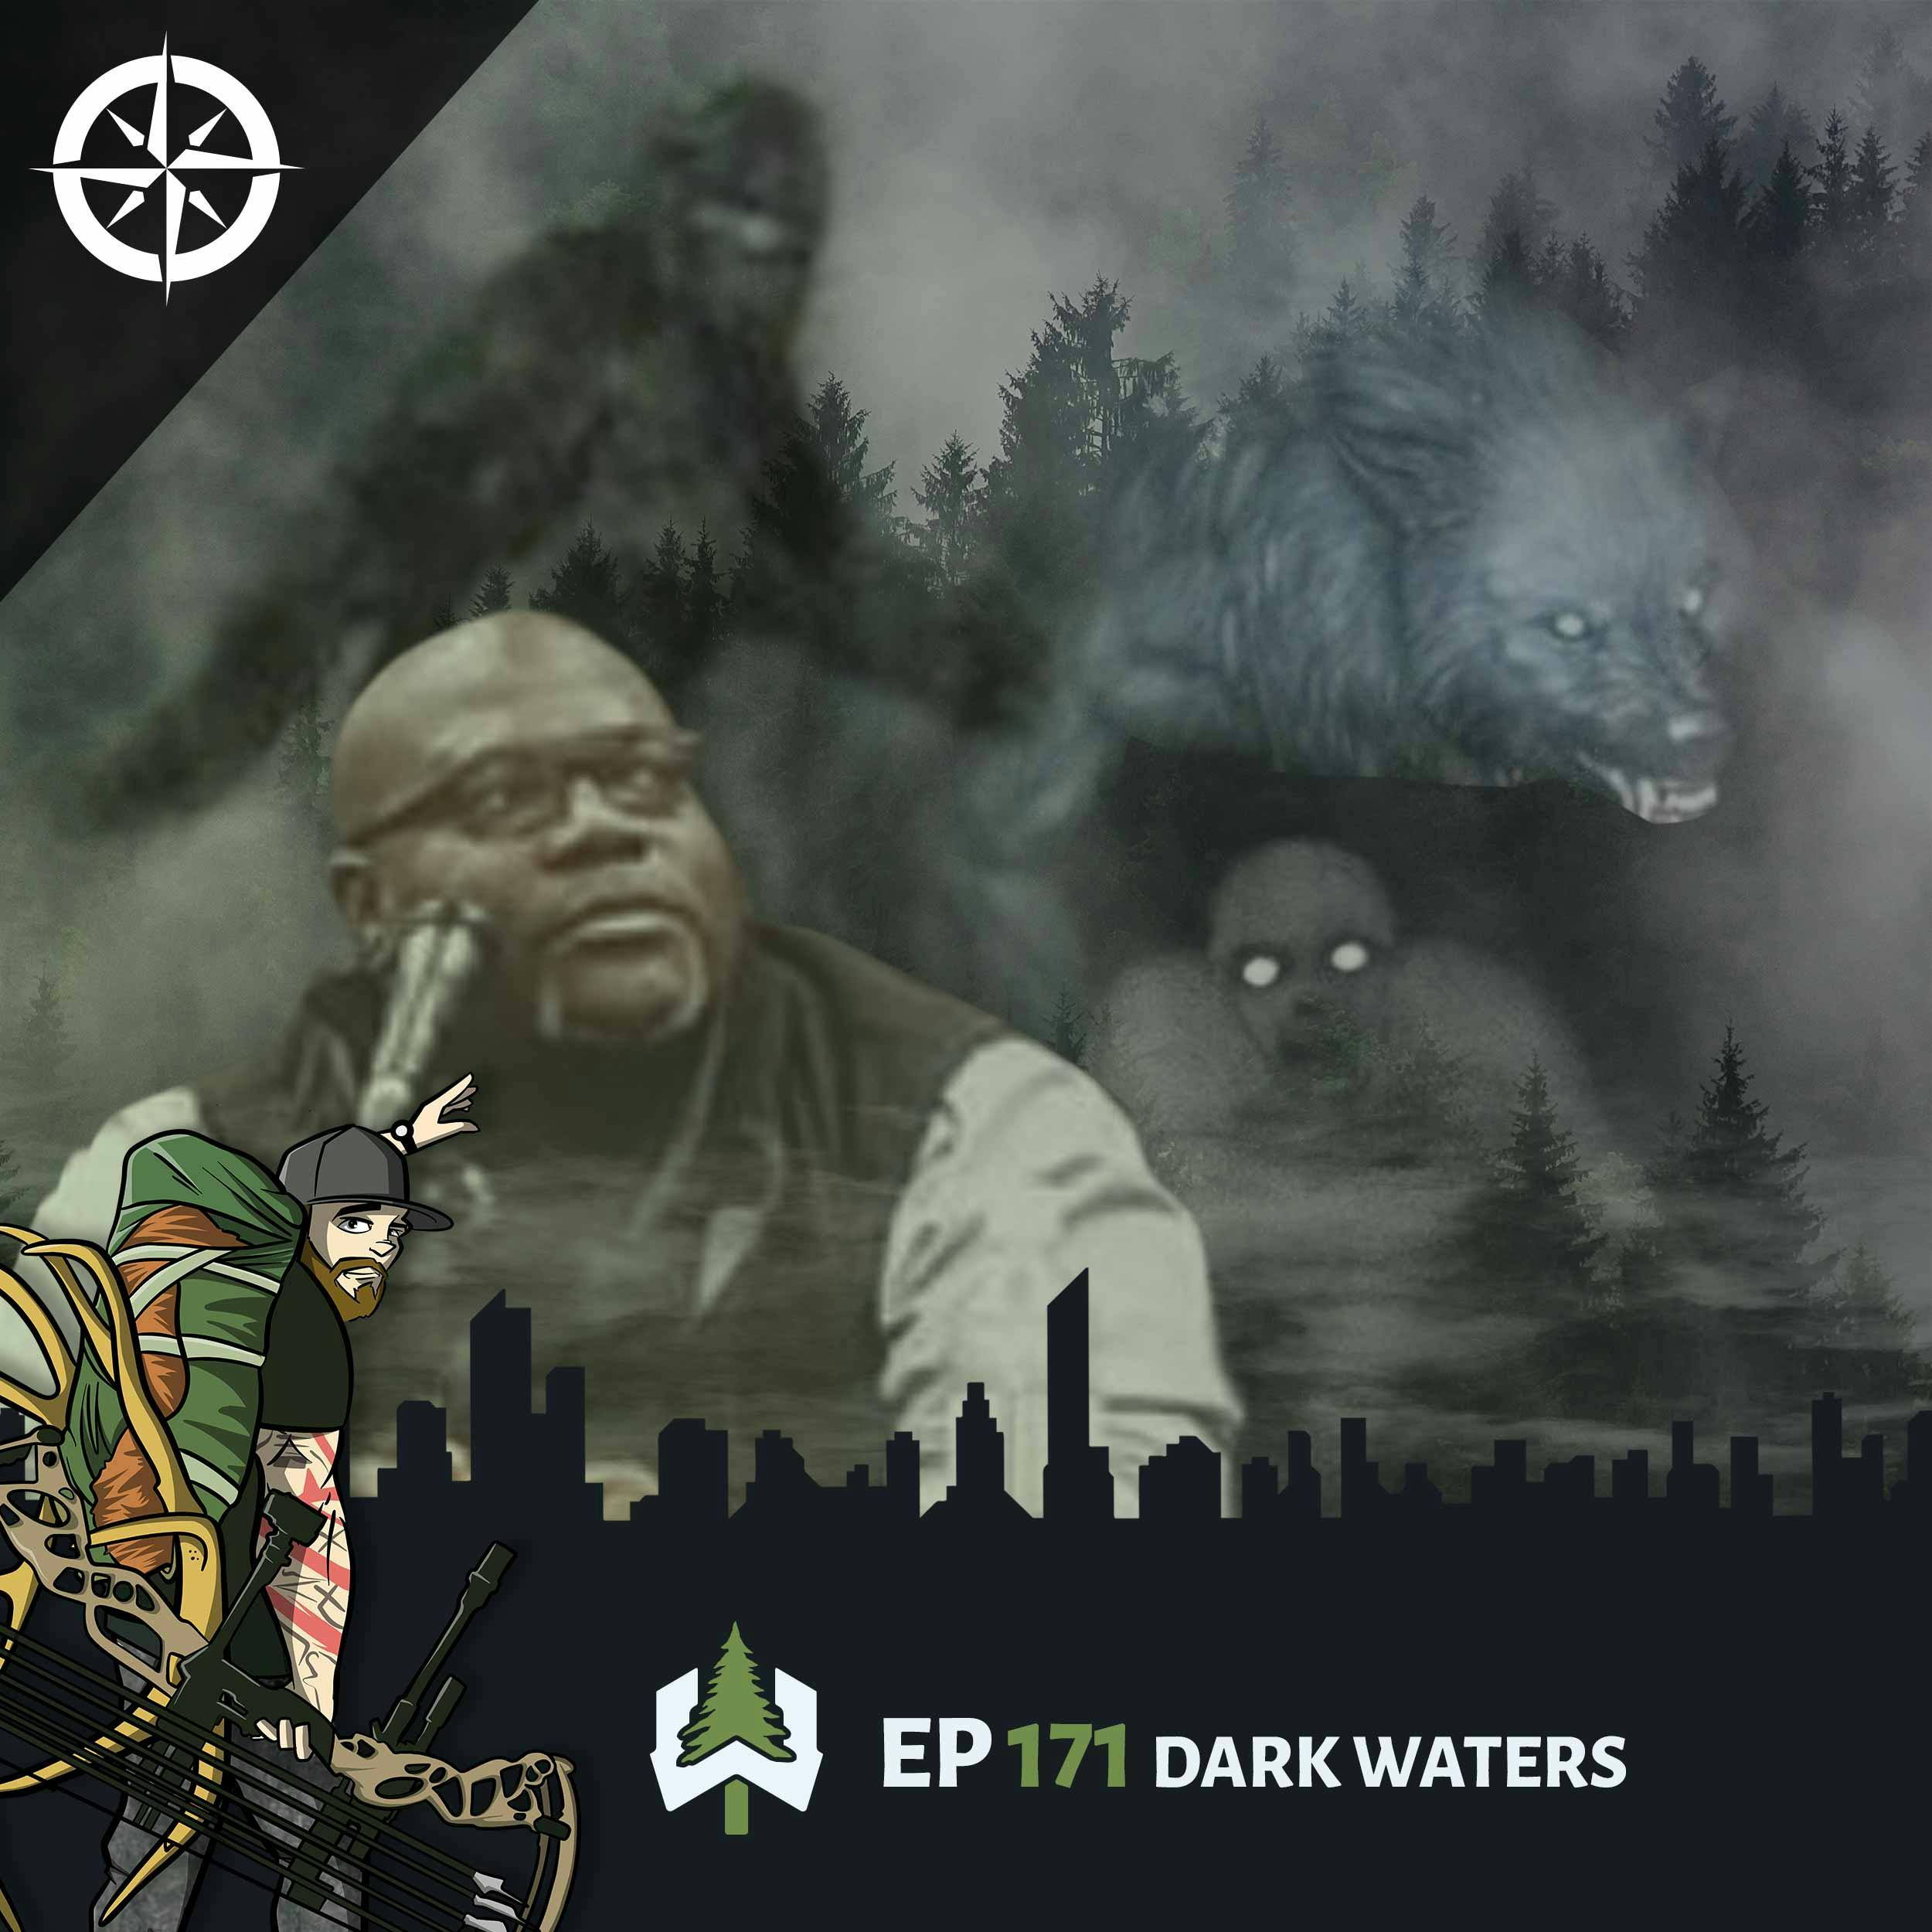 Ep 171 - Dark Waters: Dark Stories of Creatures that Go Bump in the Night